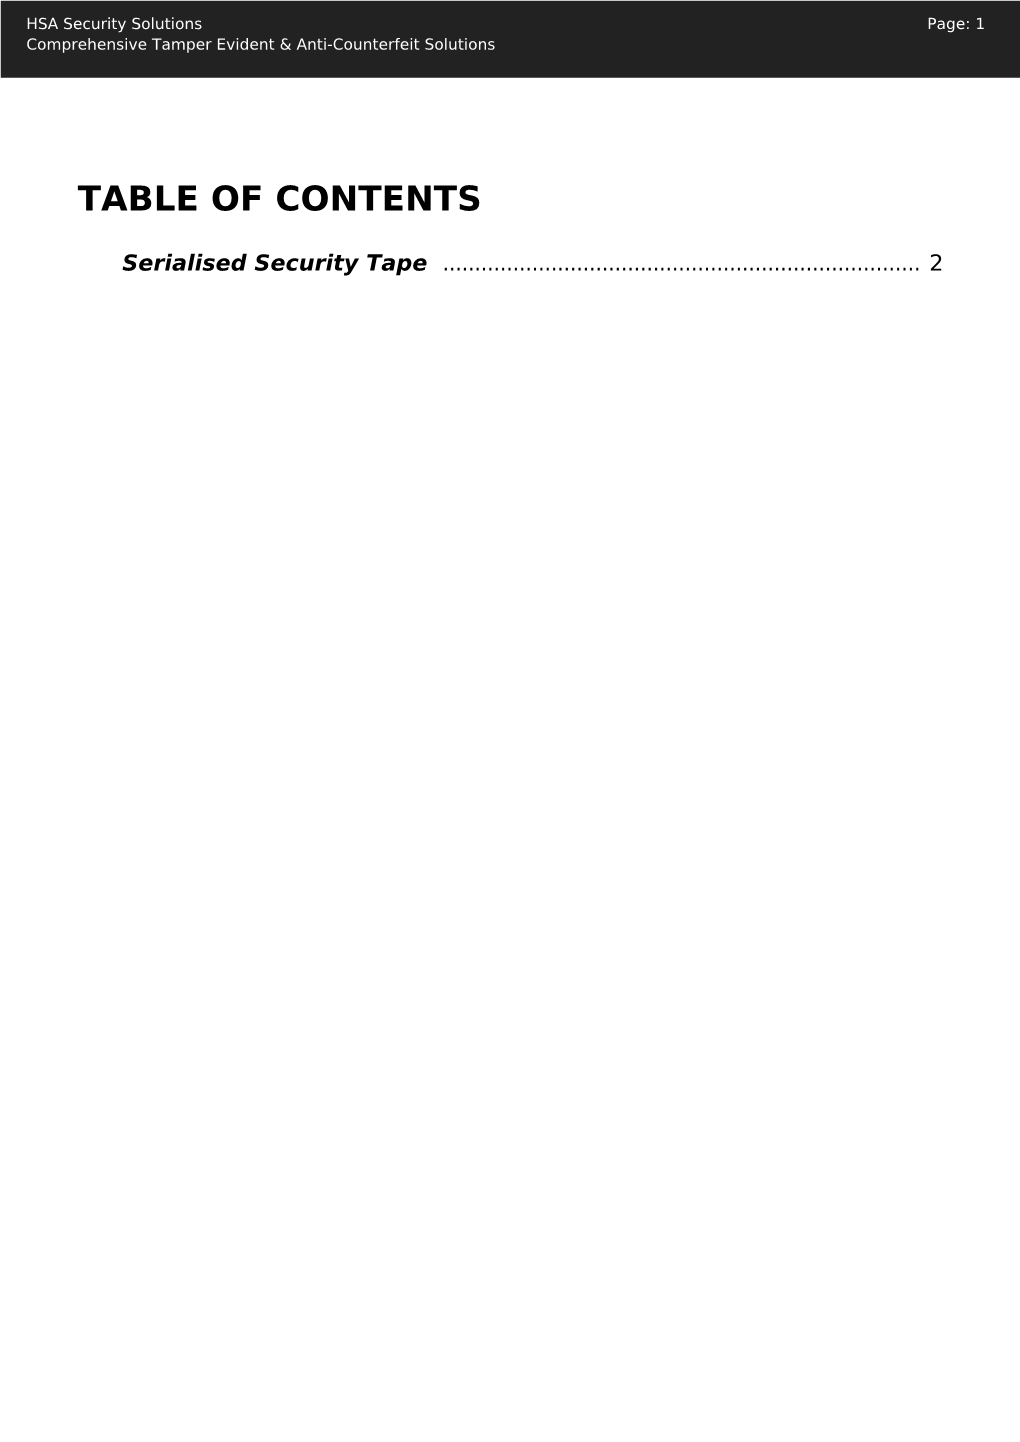 Serialised-Security-Tape Catalog